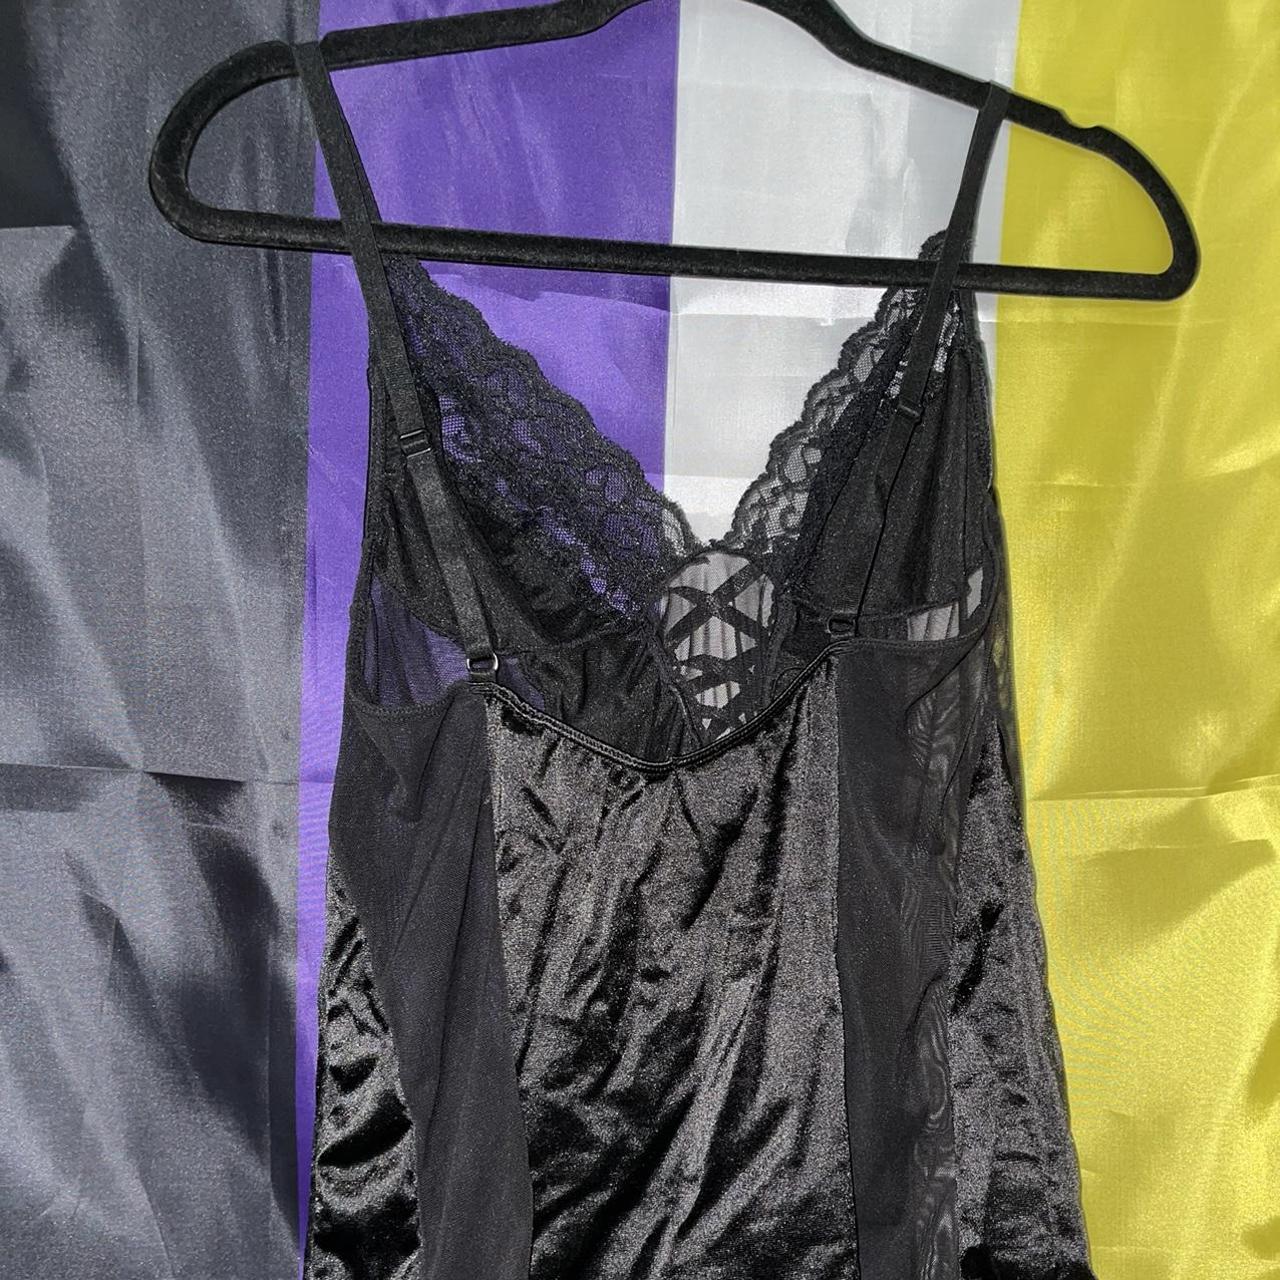 Rene Rofe Black Satin/Mesh/Lace lingerie top with... - Depop